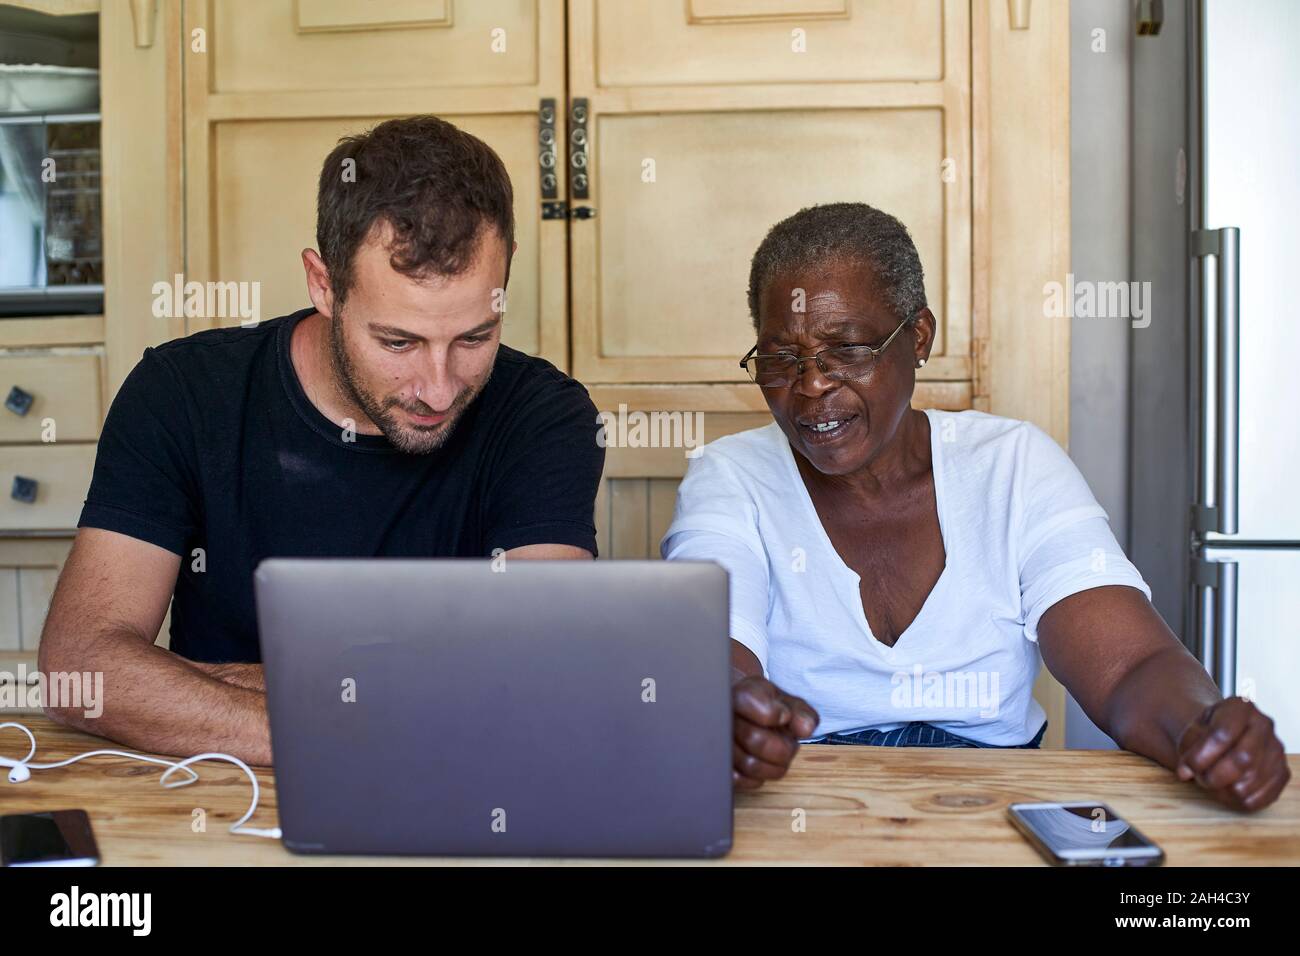 Senior woman and man sitting at kitchen table sharing laptop Stock Photo